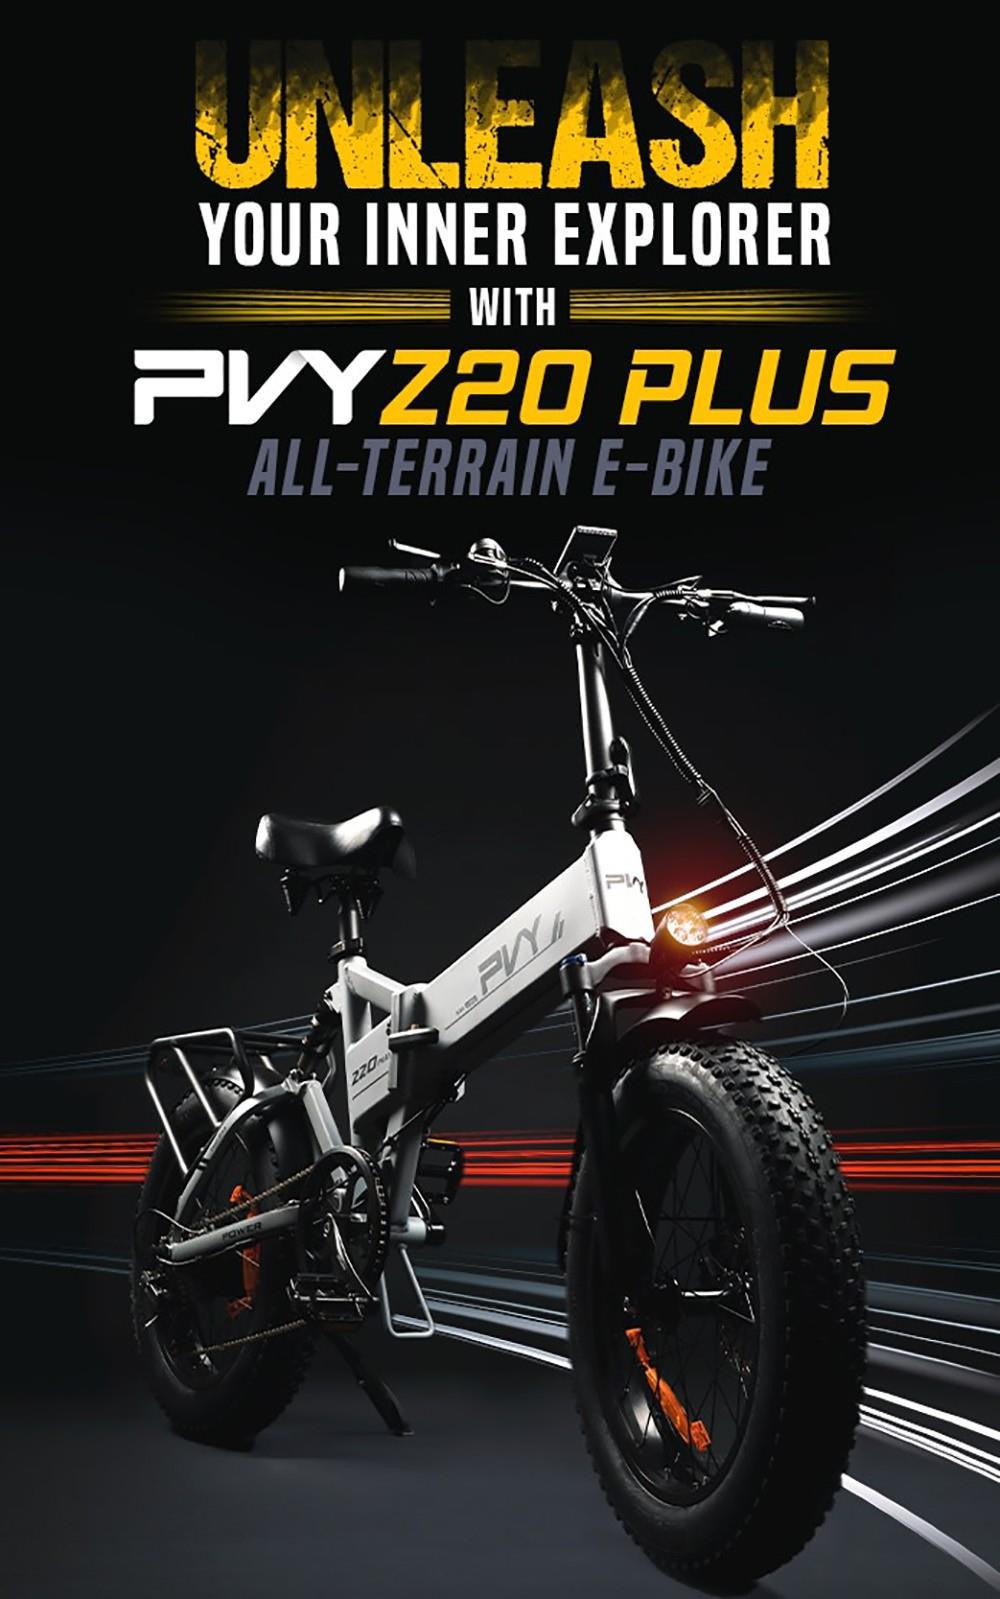 PVY Z20 Plus Faltbares Off-Road Elektrofahrrad, 1000W Motor, 48V 16.5Ah Batterie, Dreifach-Federsystem - Orange